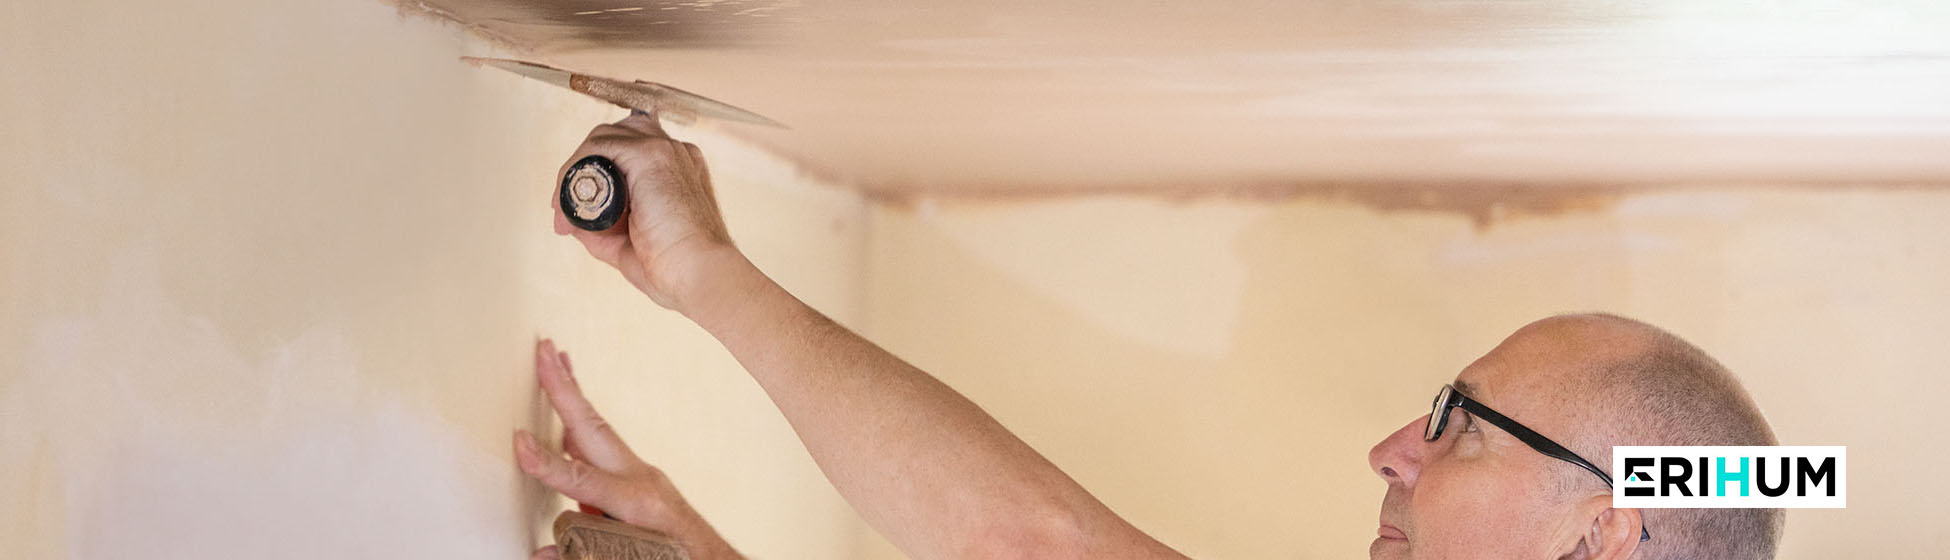 Reparer fissure faux plafond